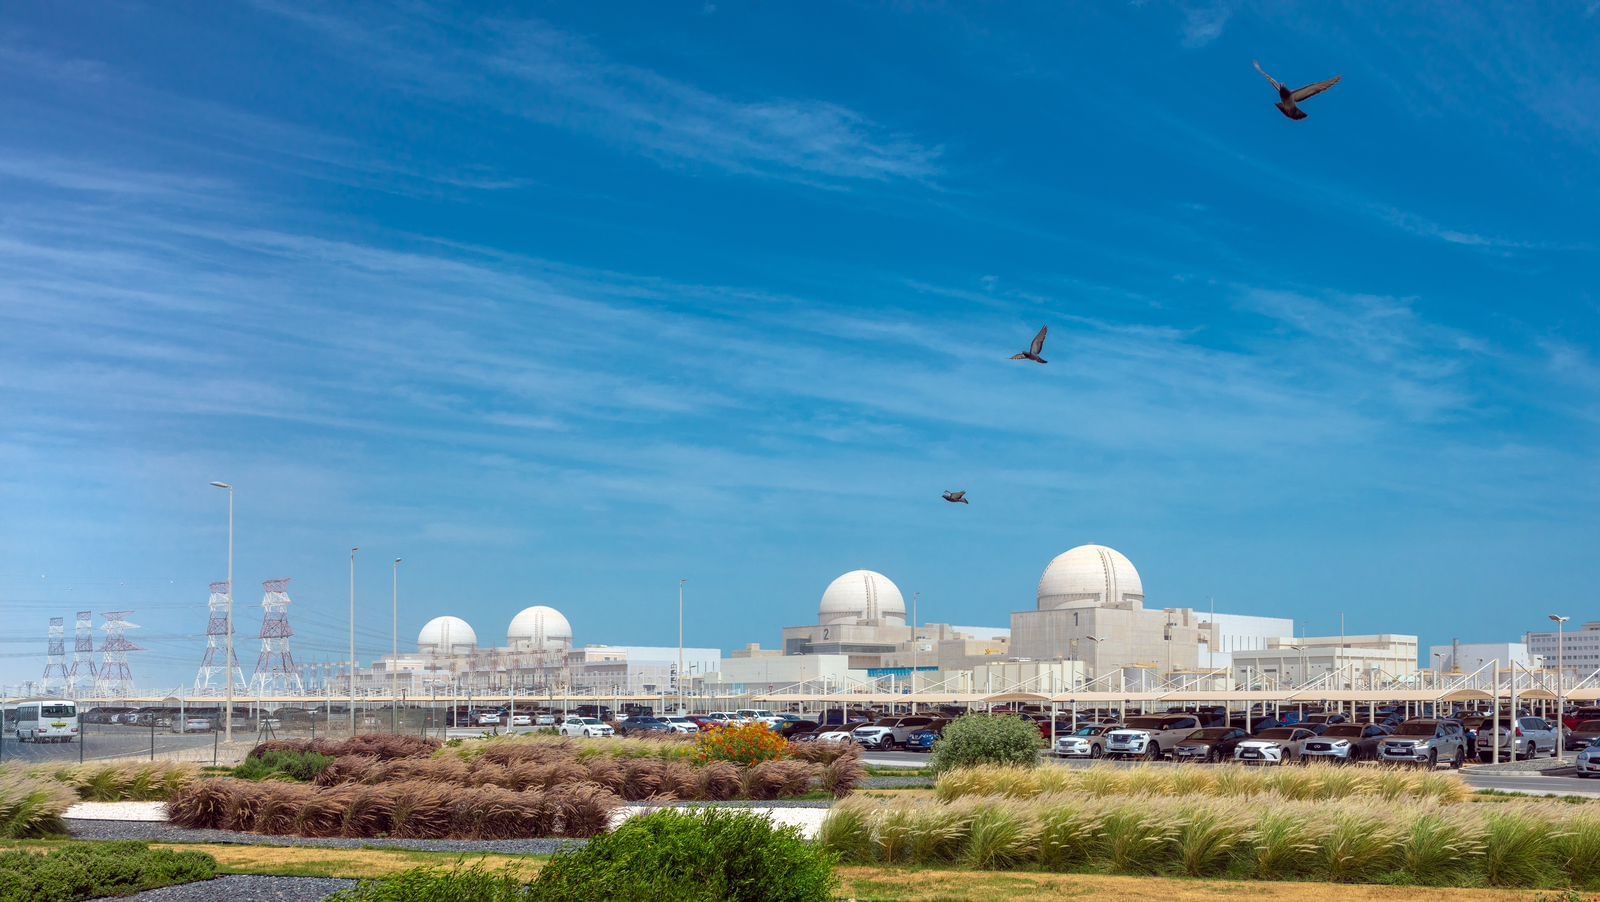 UAE nuclear energy plant